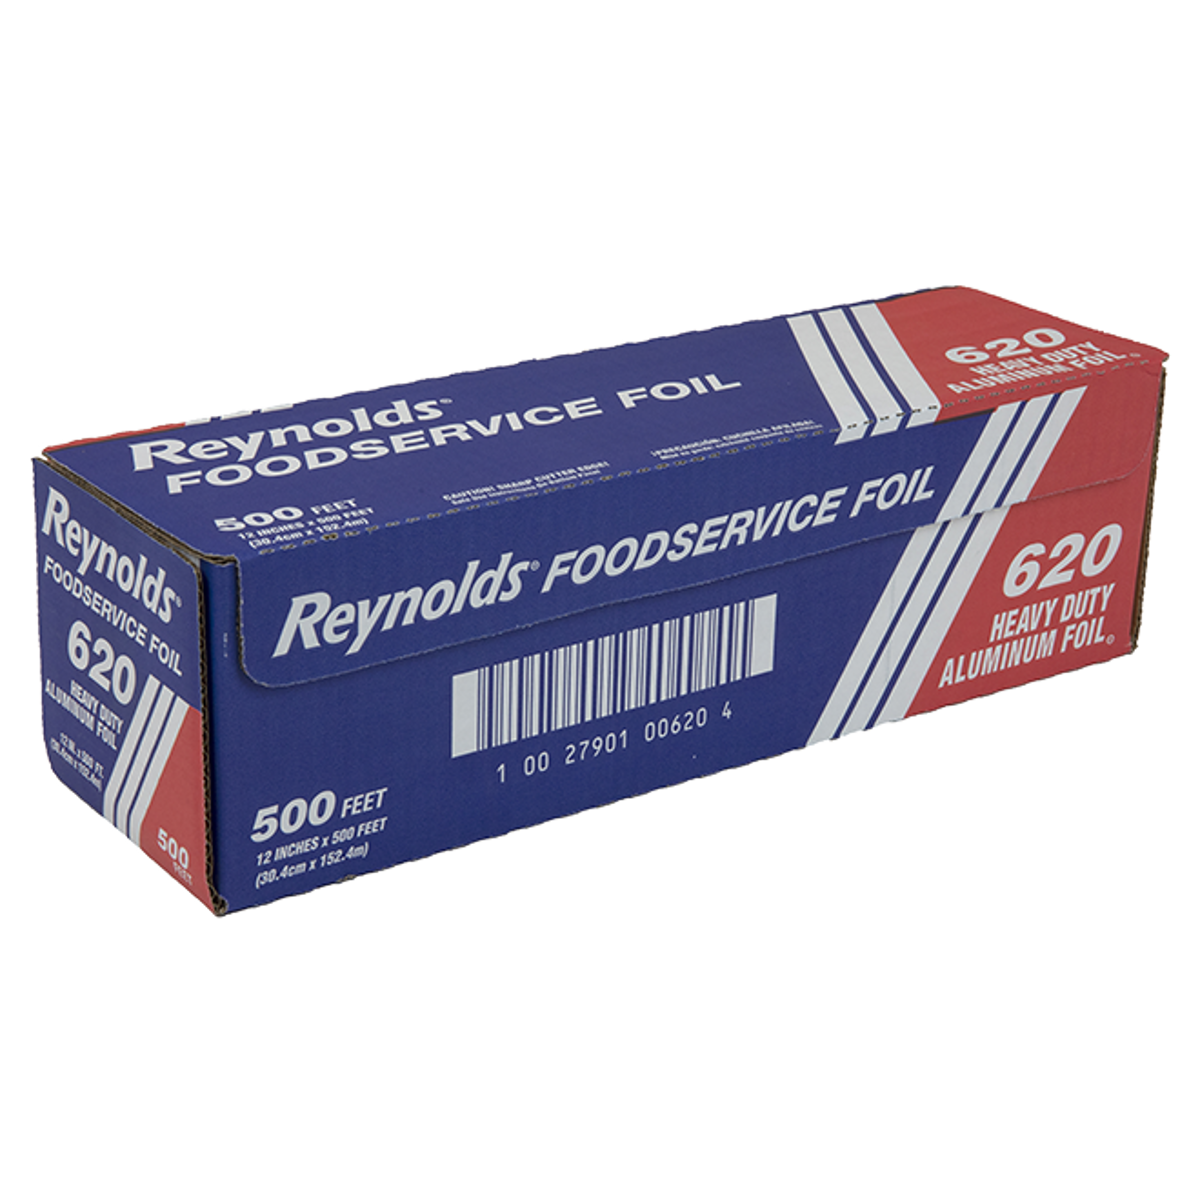 Reynolds 721 Reynolds Silver Foil 12 x 10.75 - 500 ct - 1 item